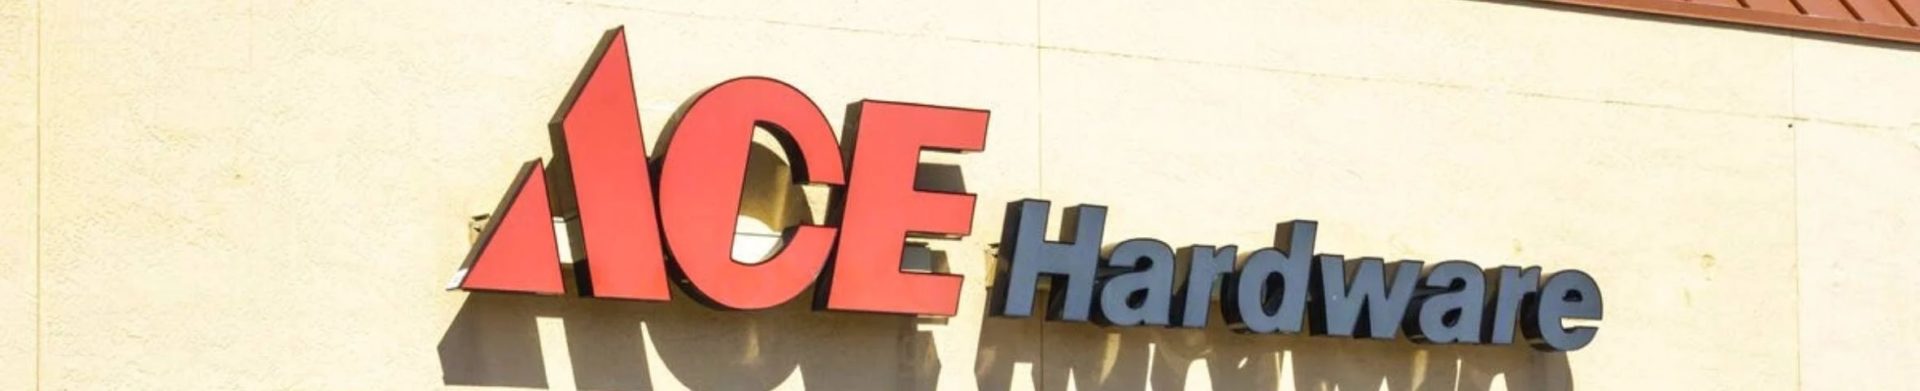 A detached Ace Hardware store